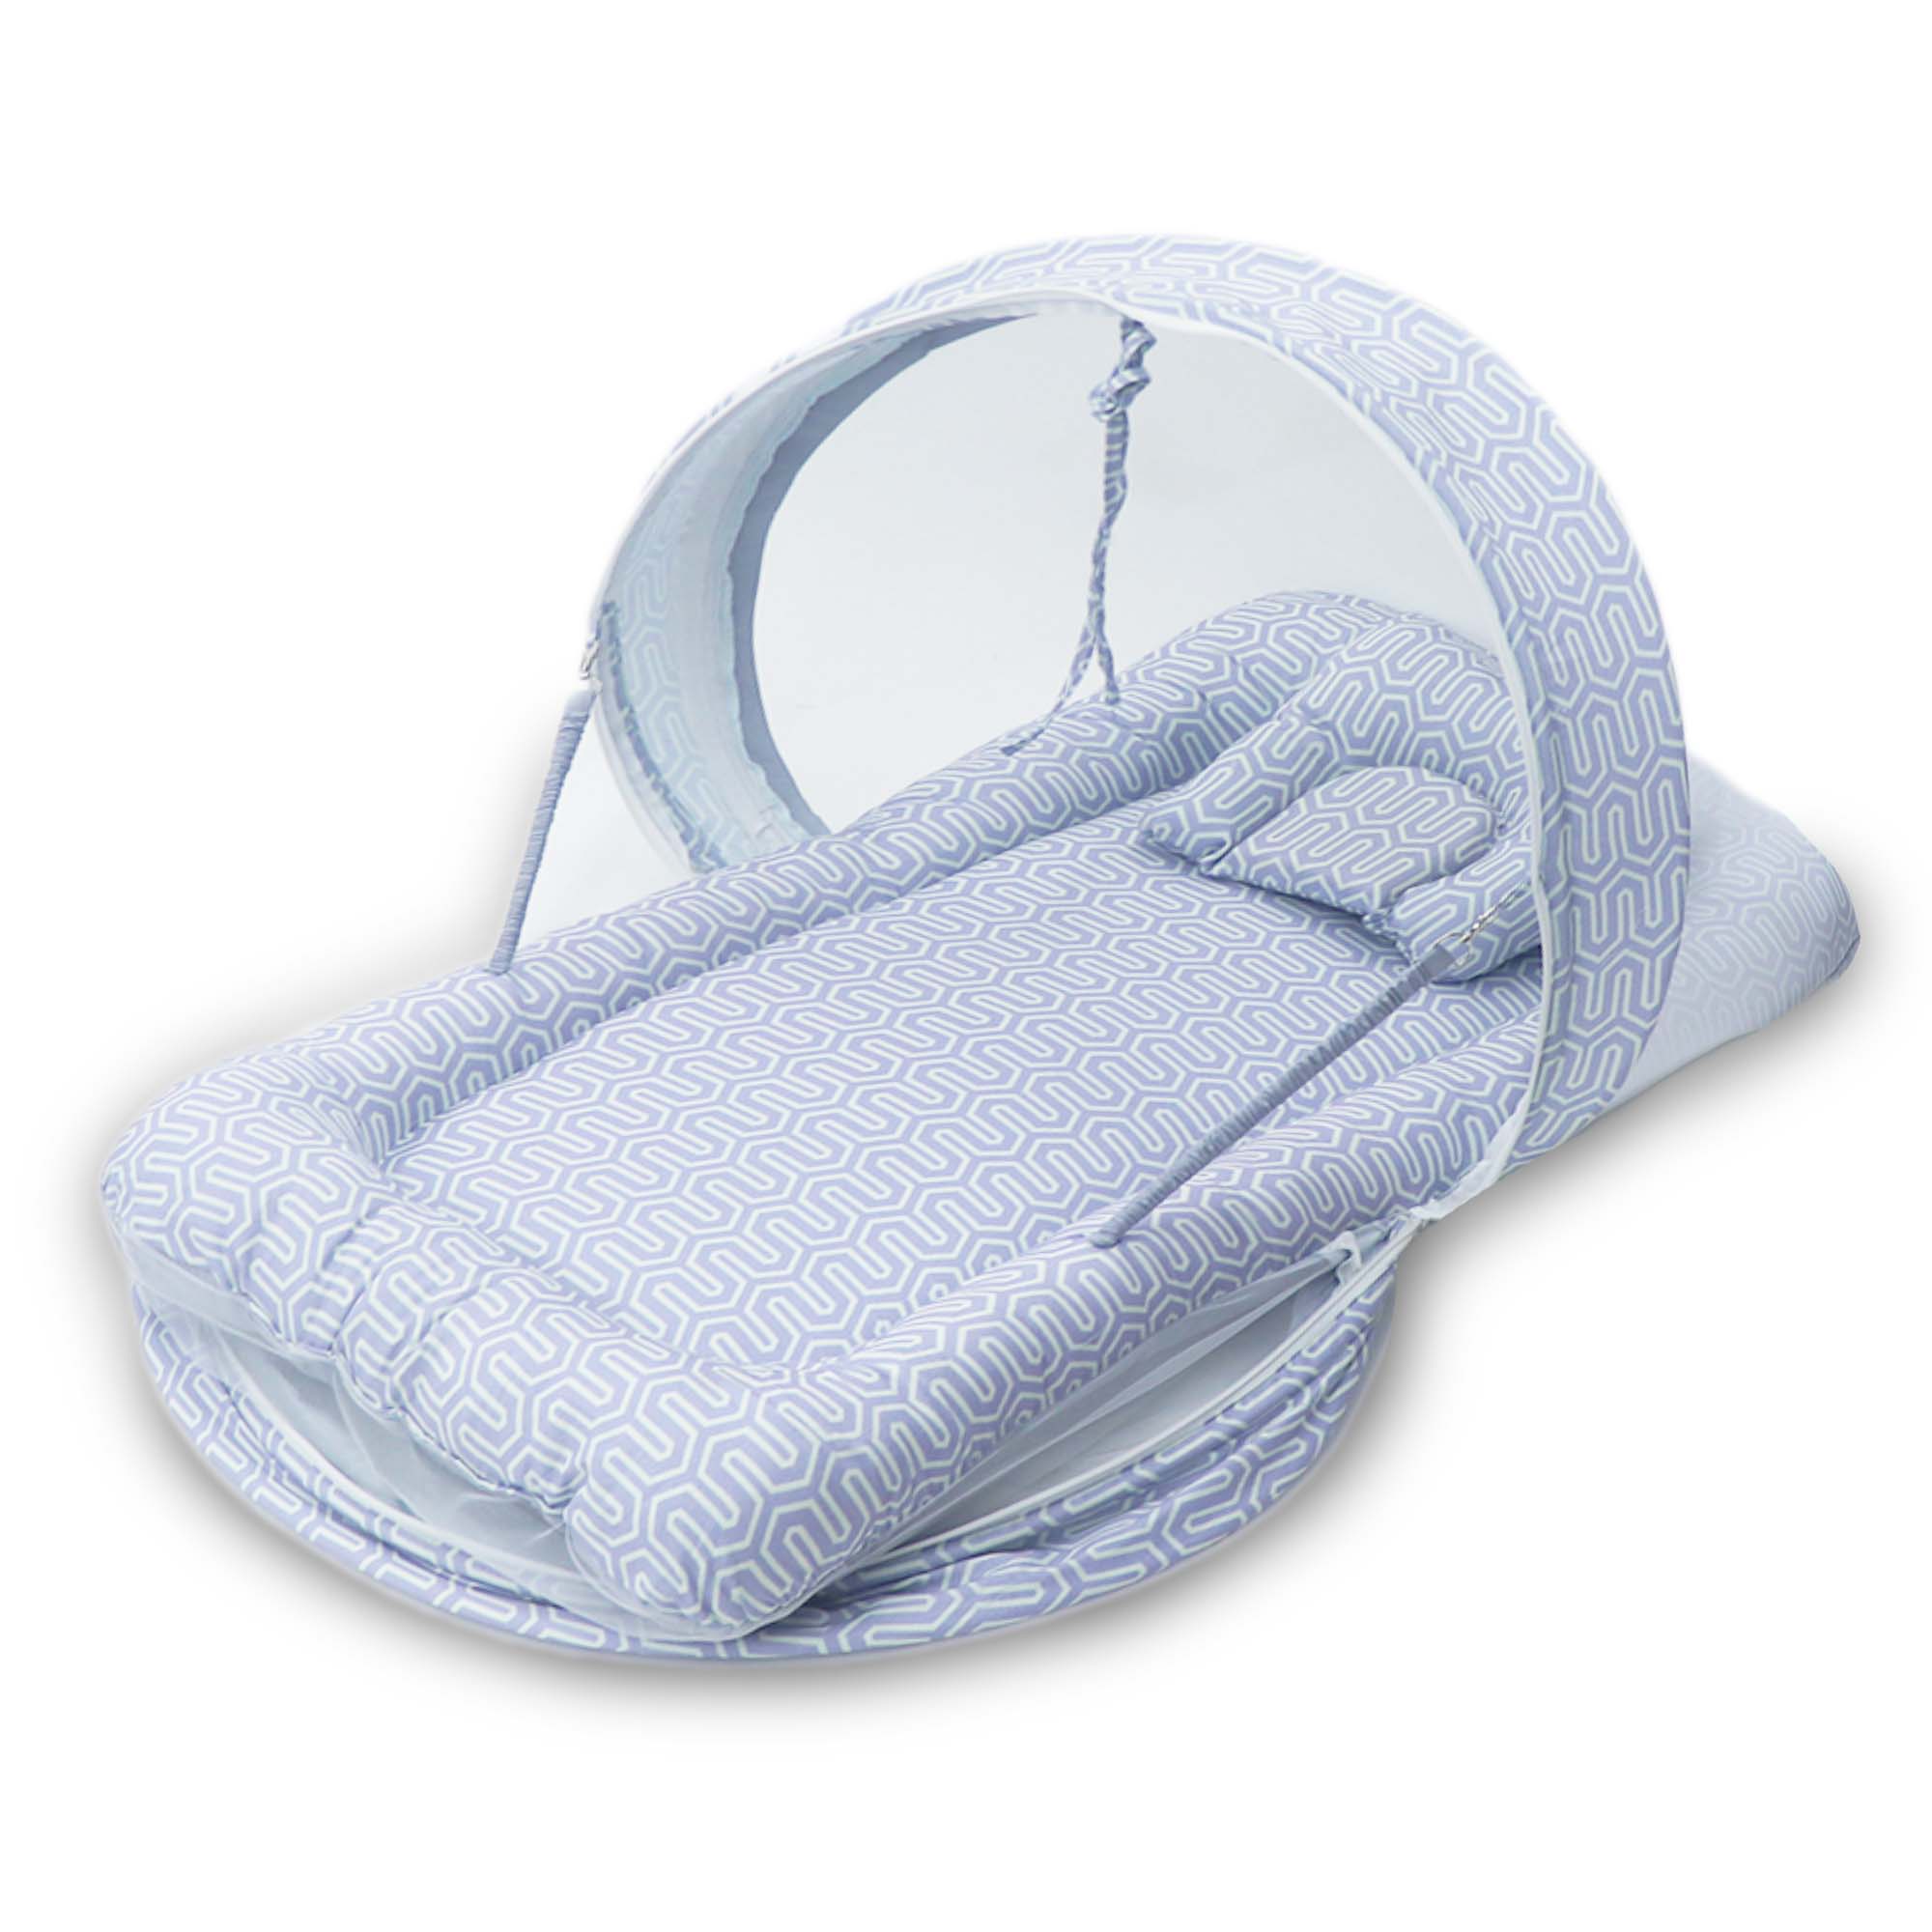 Light Lilac -  Kradyl Kroft Bassinet Style Mosquito Net Bedding for Infants